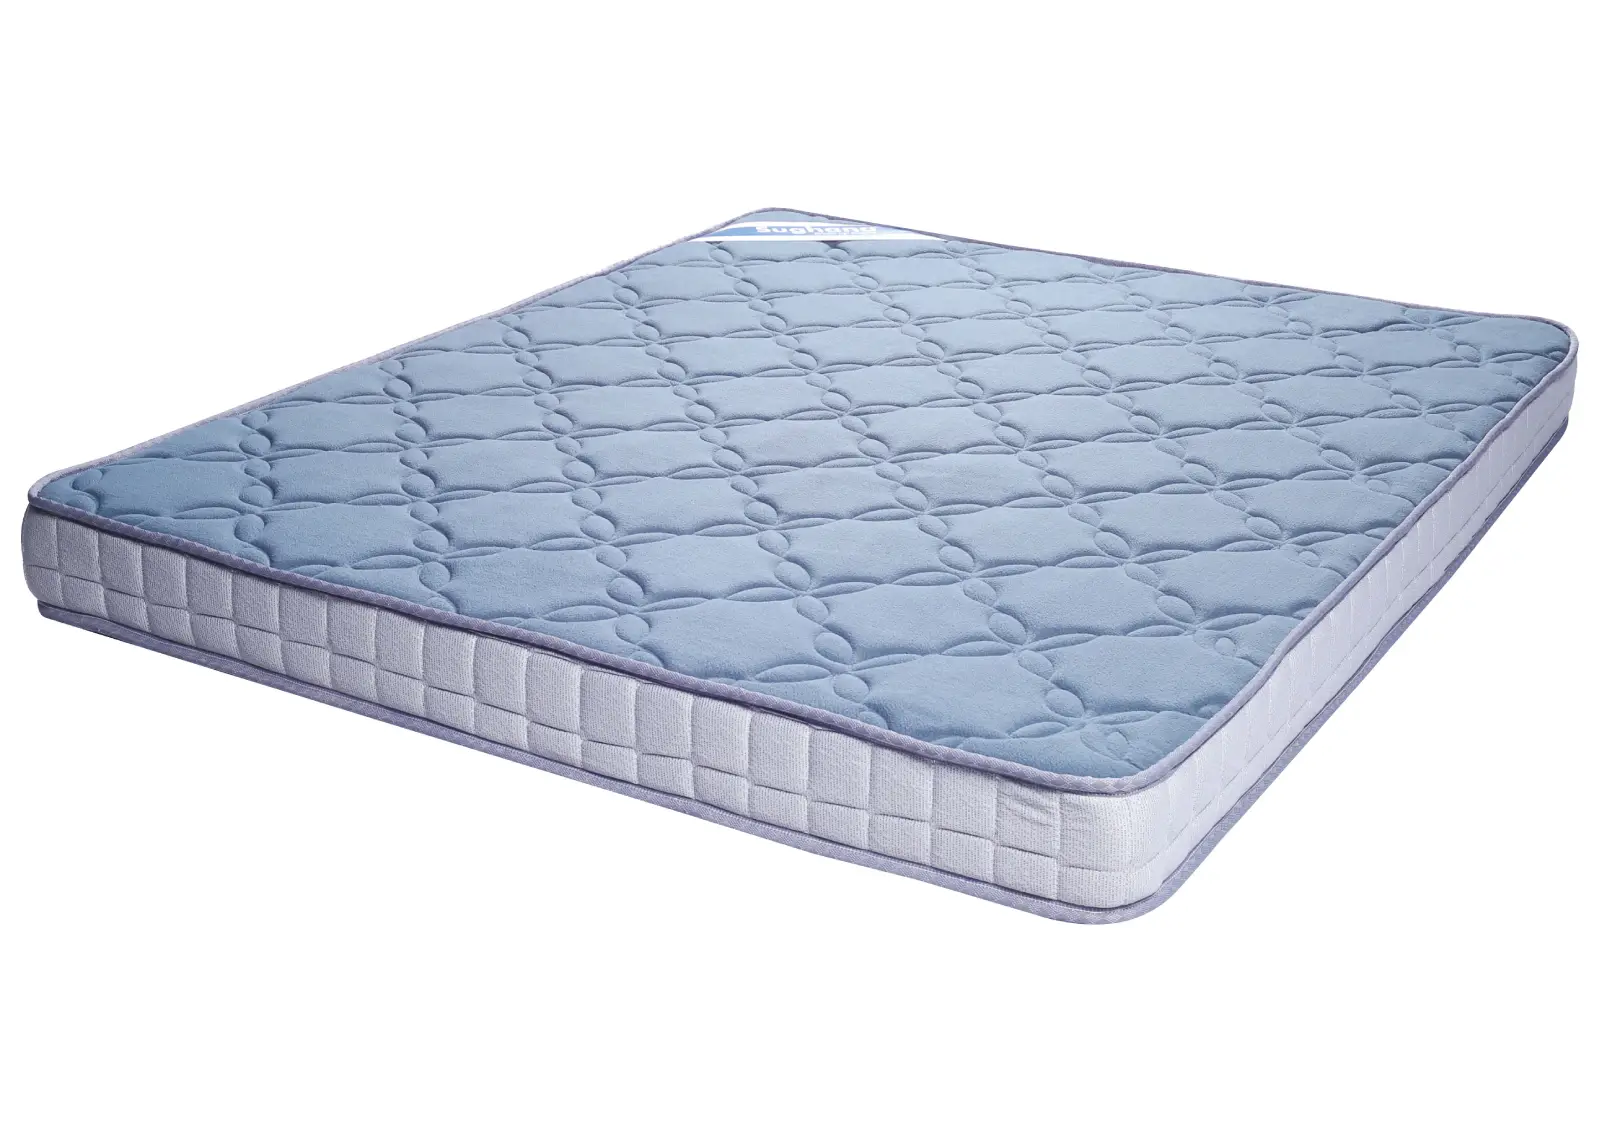 Spine Care mattress manufacturers in Kerala